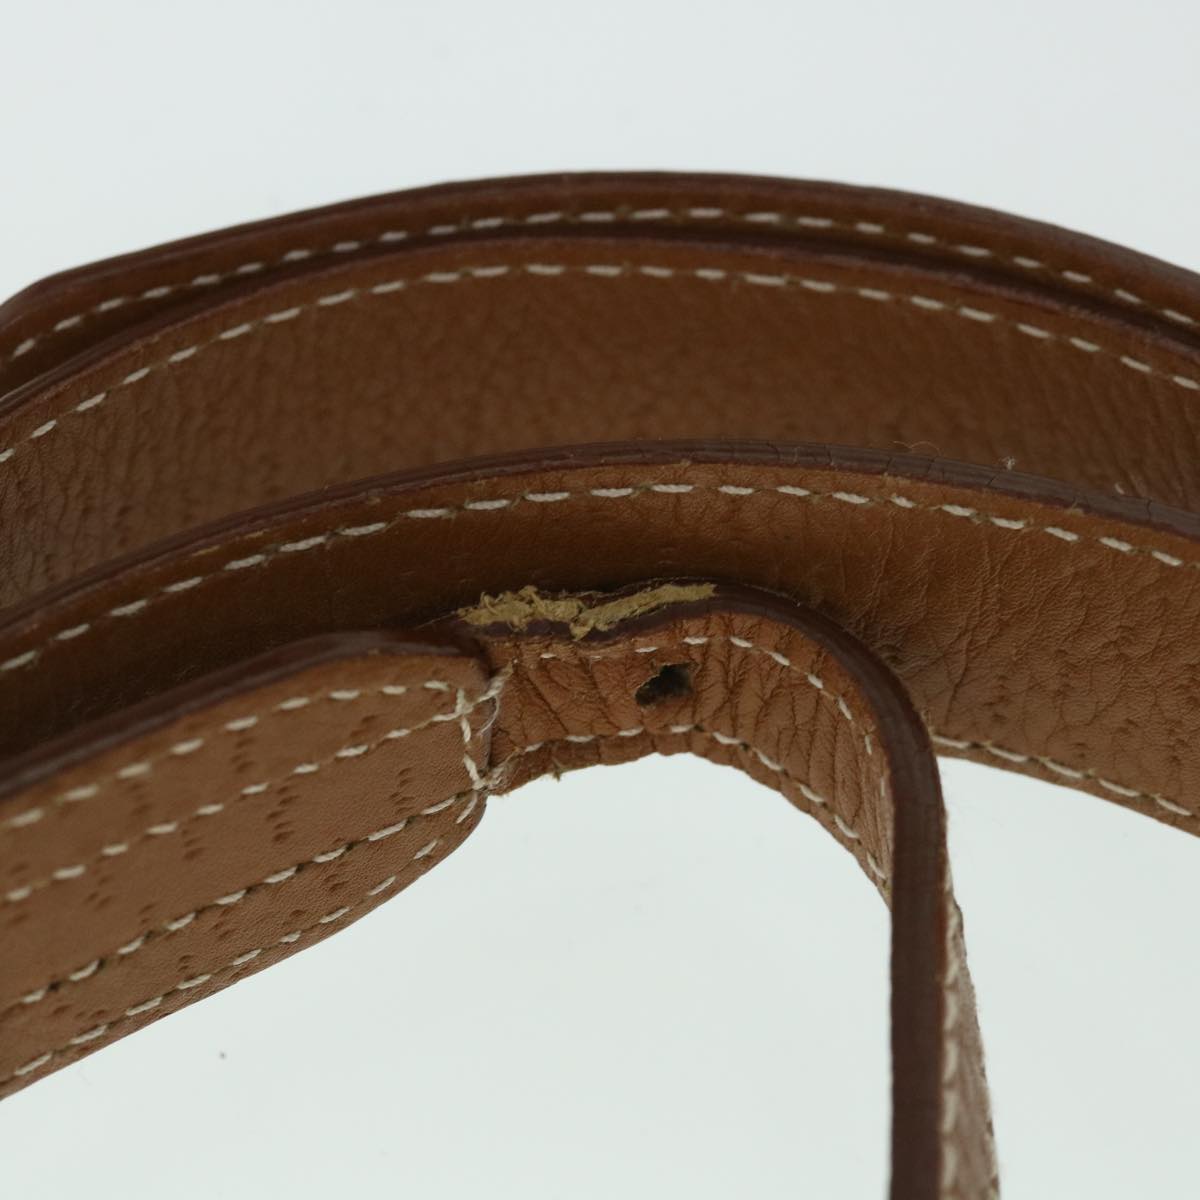 Salvatore Ferragamo Gancini Shoulder Bag Leather 2way Brown Auth 54917